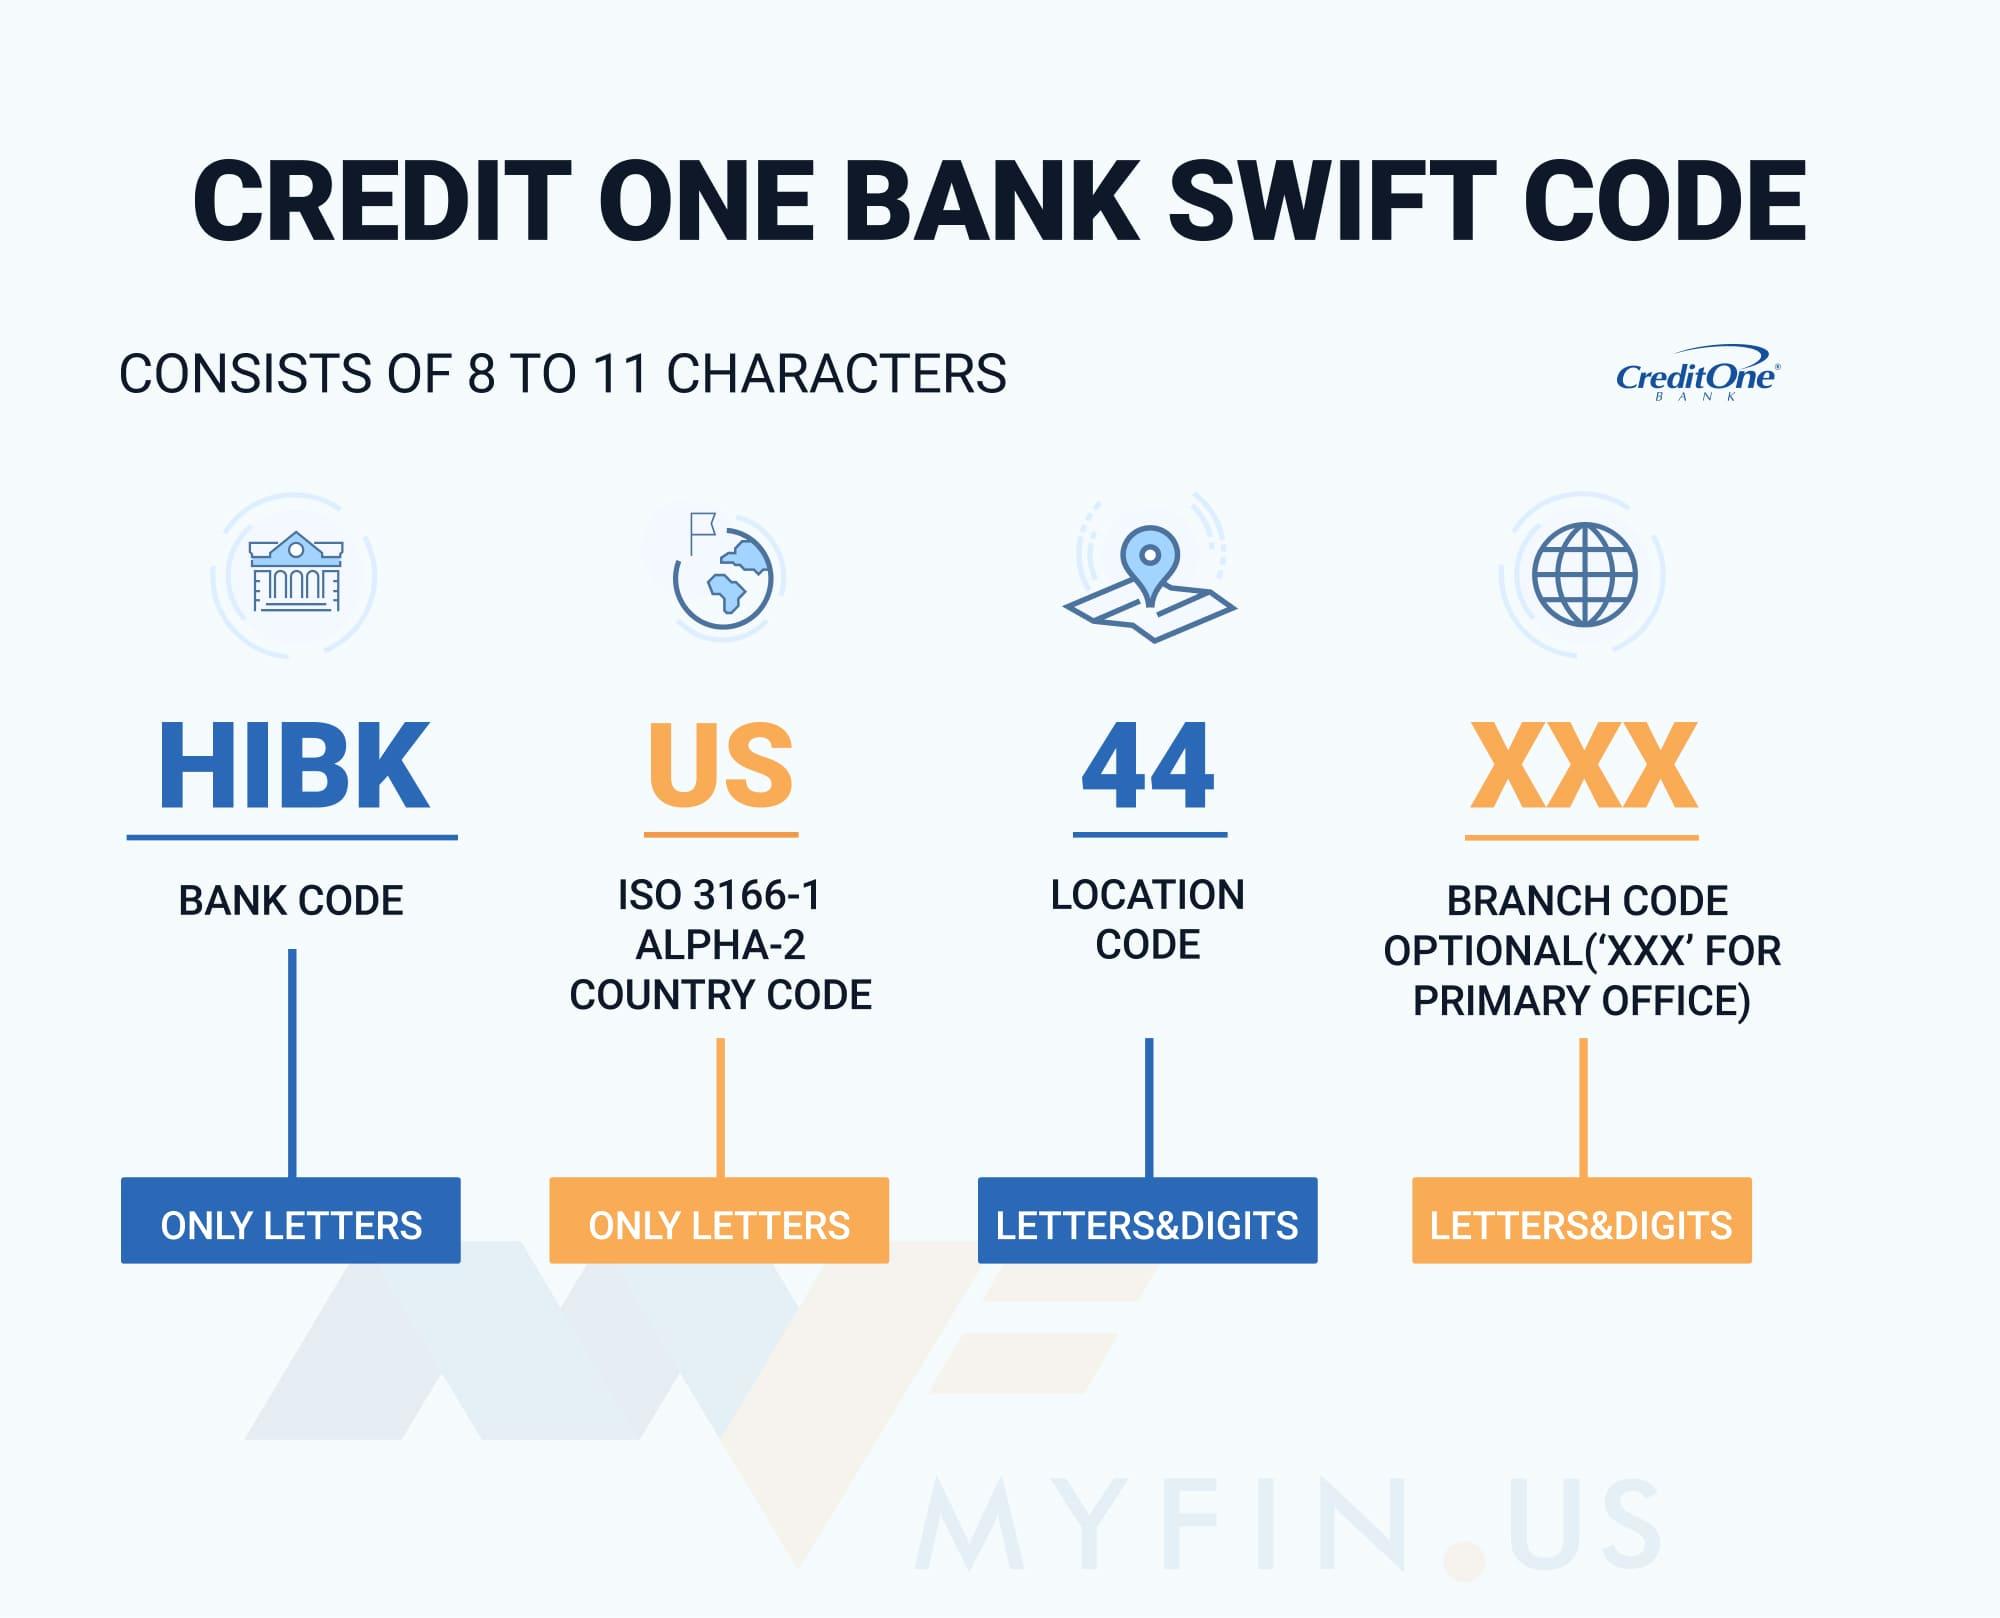 SWIFT-code Credit One® Bank